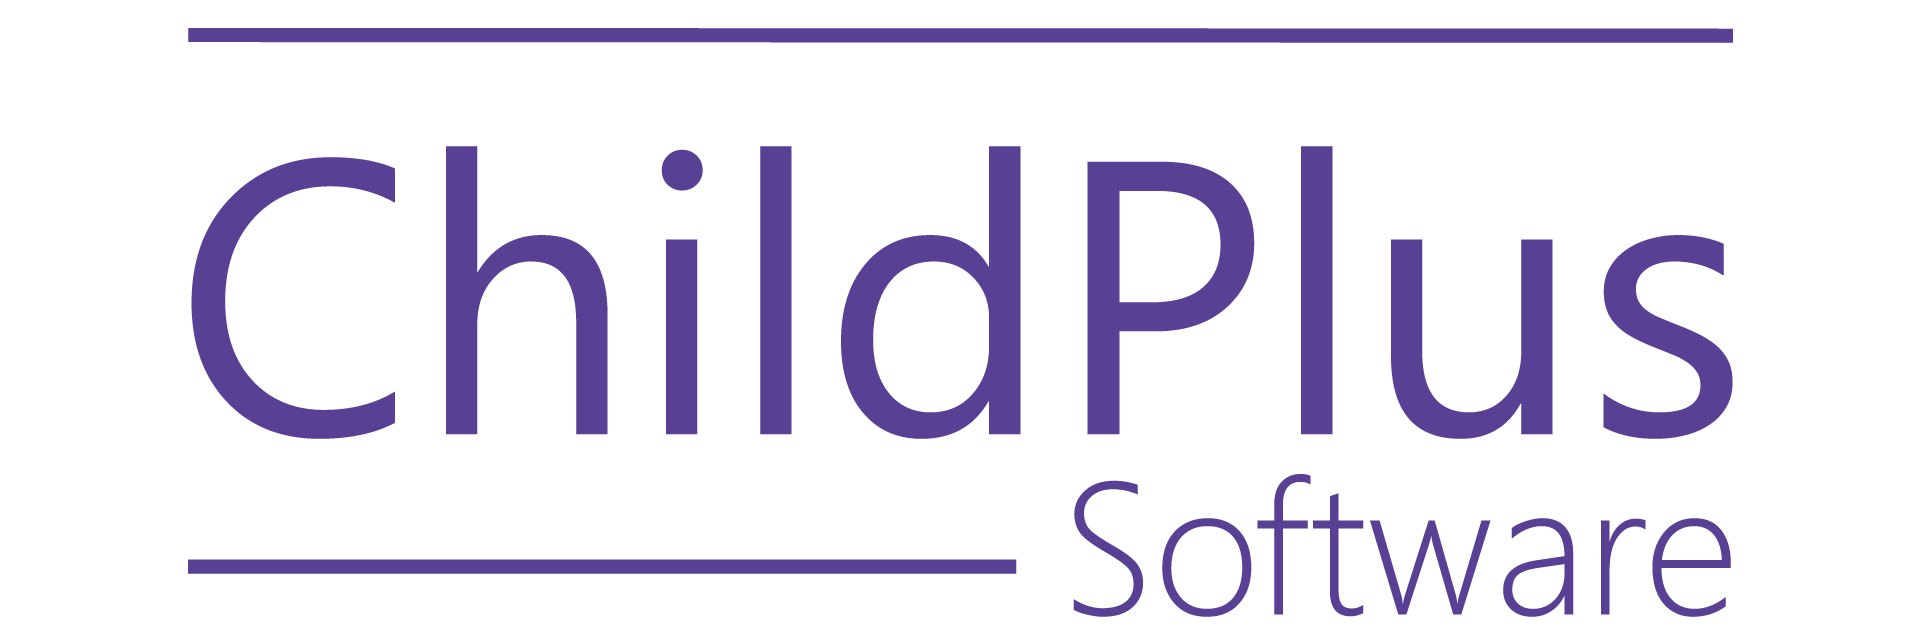 ChildPlus softward logo